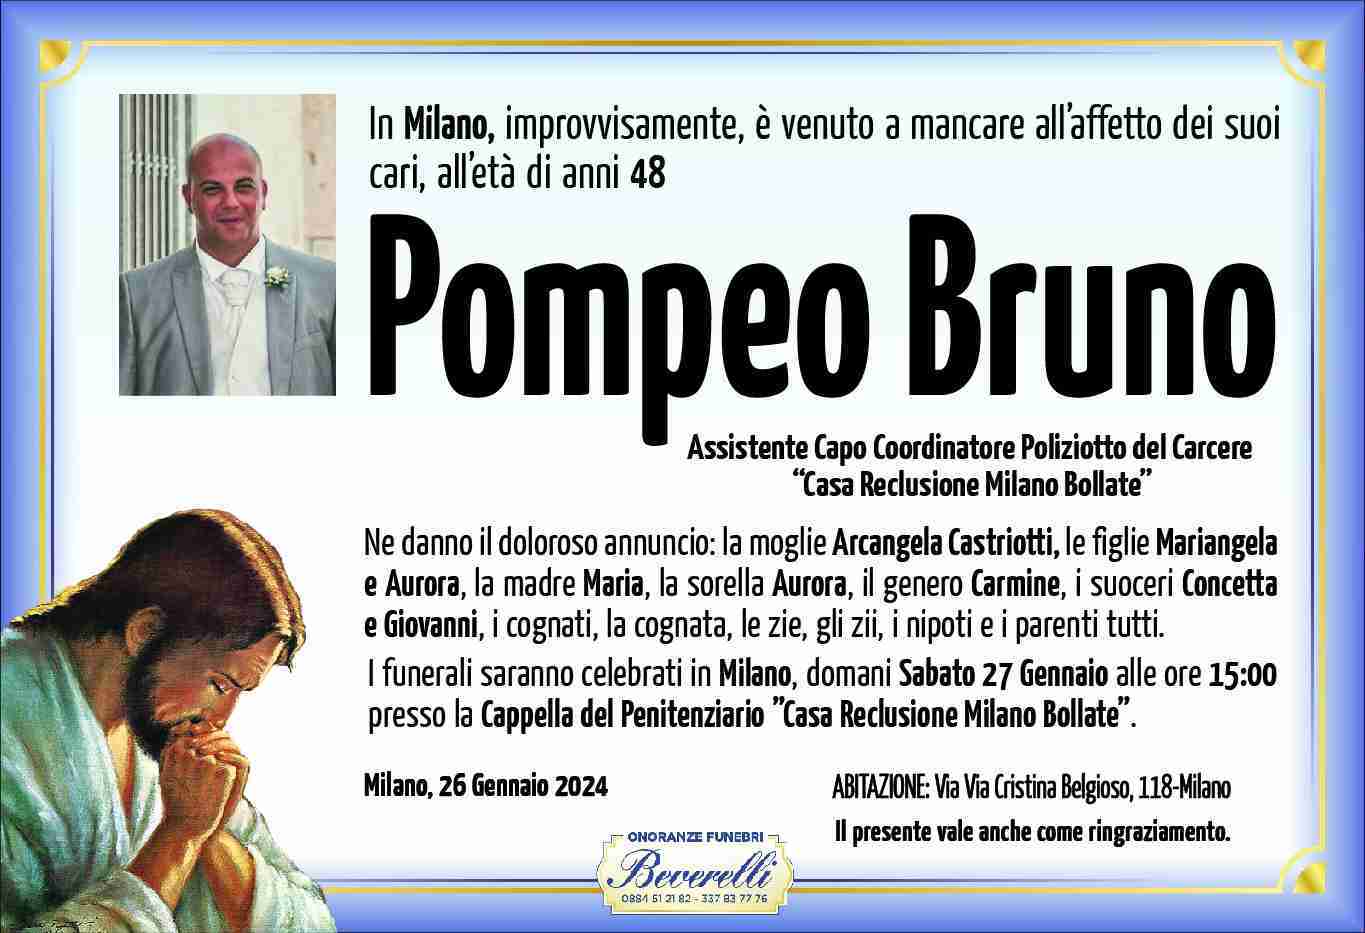 Pompeo Bruno